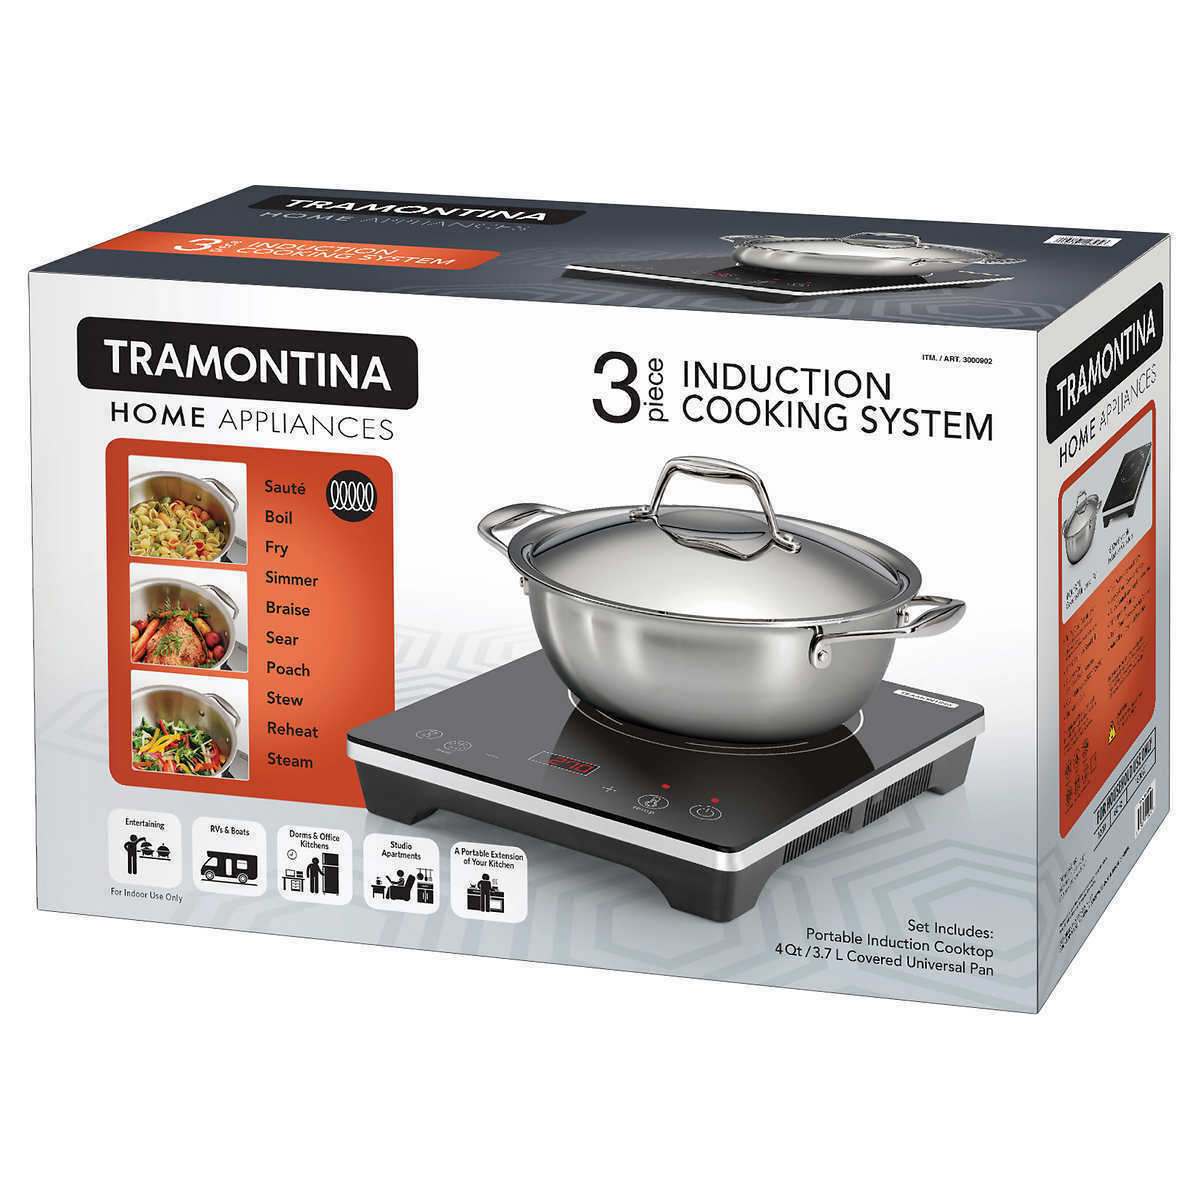 Tramontina 80114/535DS Professional Aluminum Nonstick Restaurant Fry Pan, 10